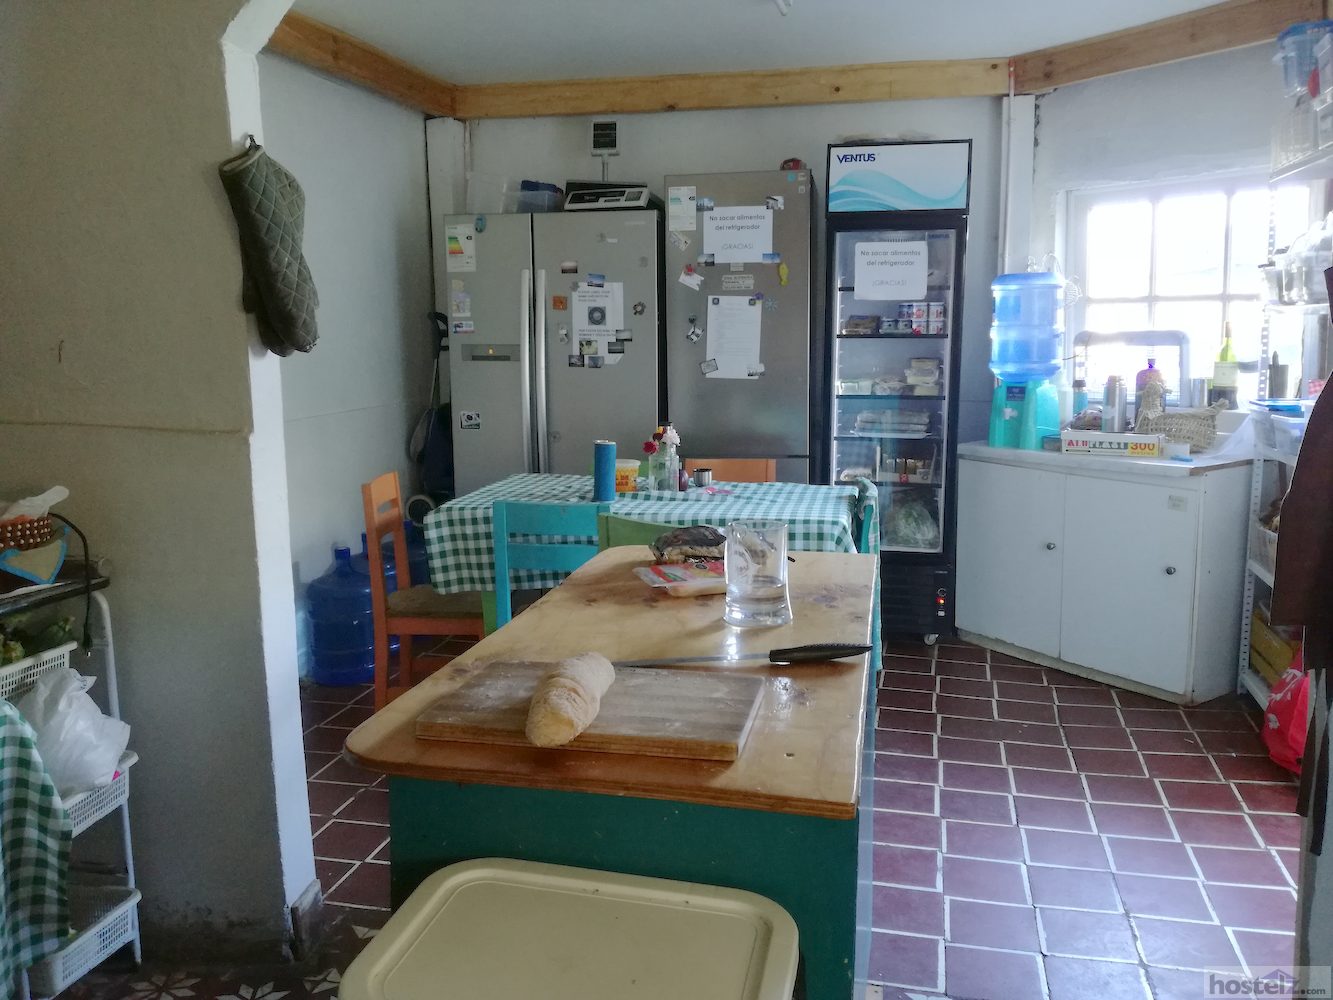 Kitchen with fridges